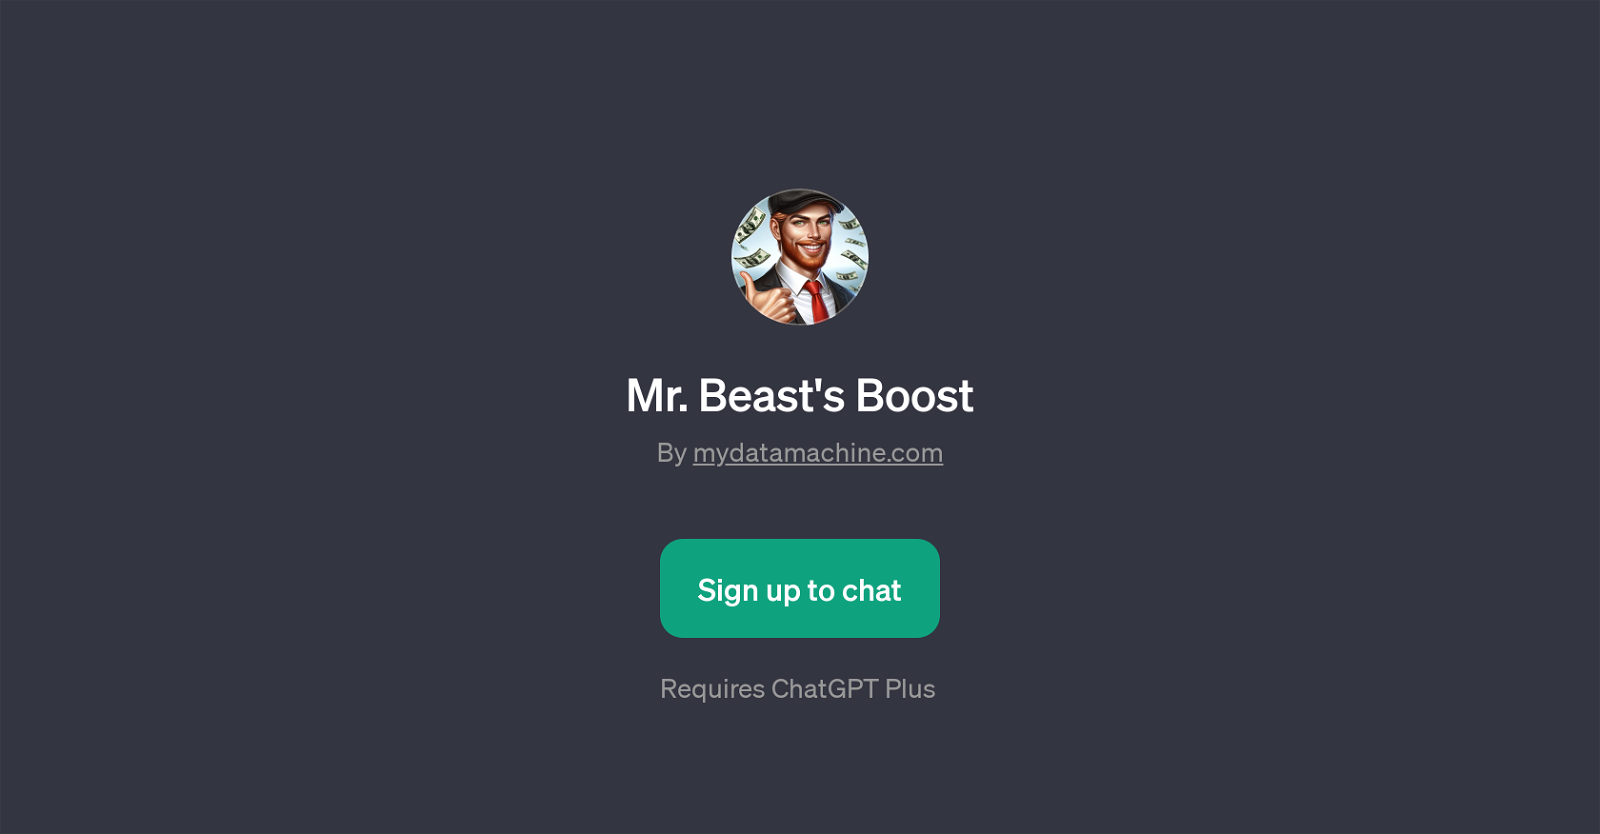 Mr. Beast's Boost website